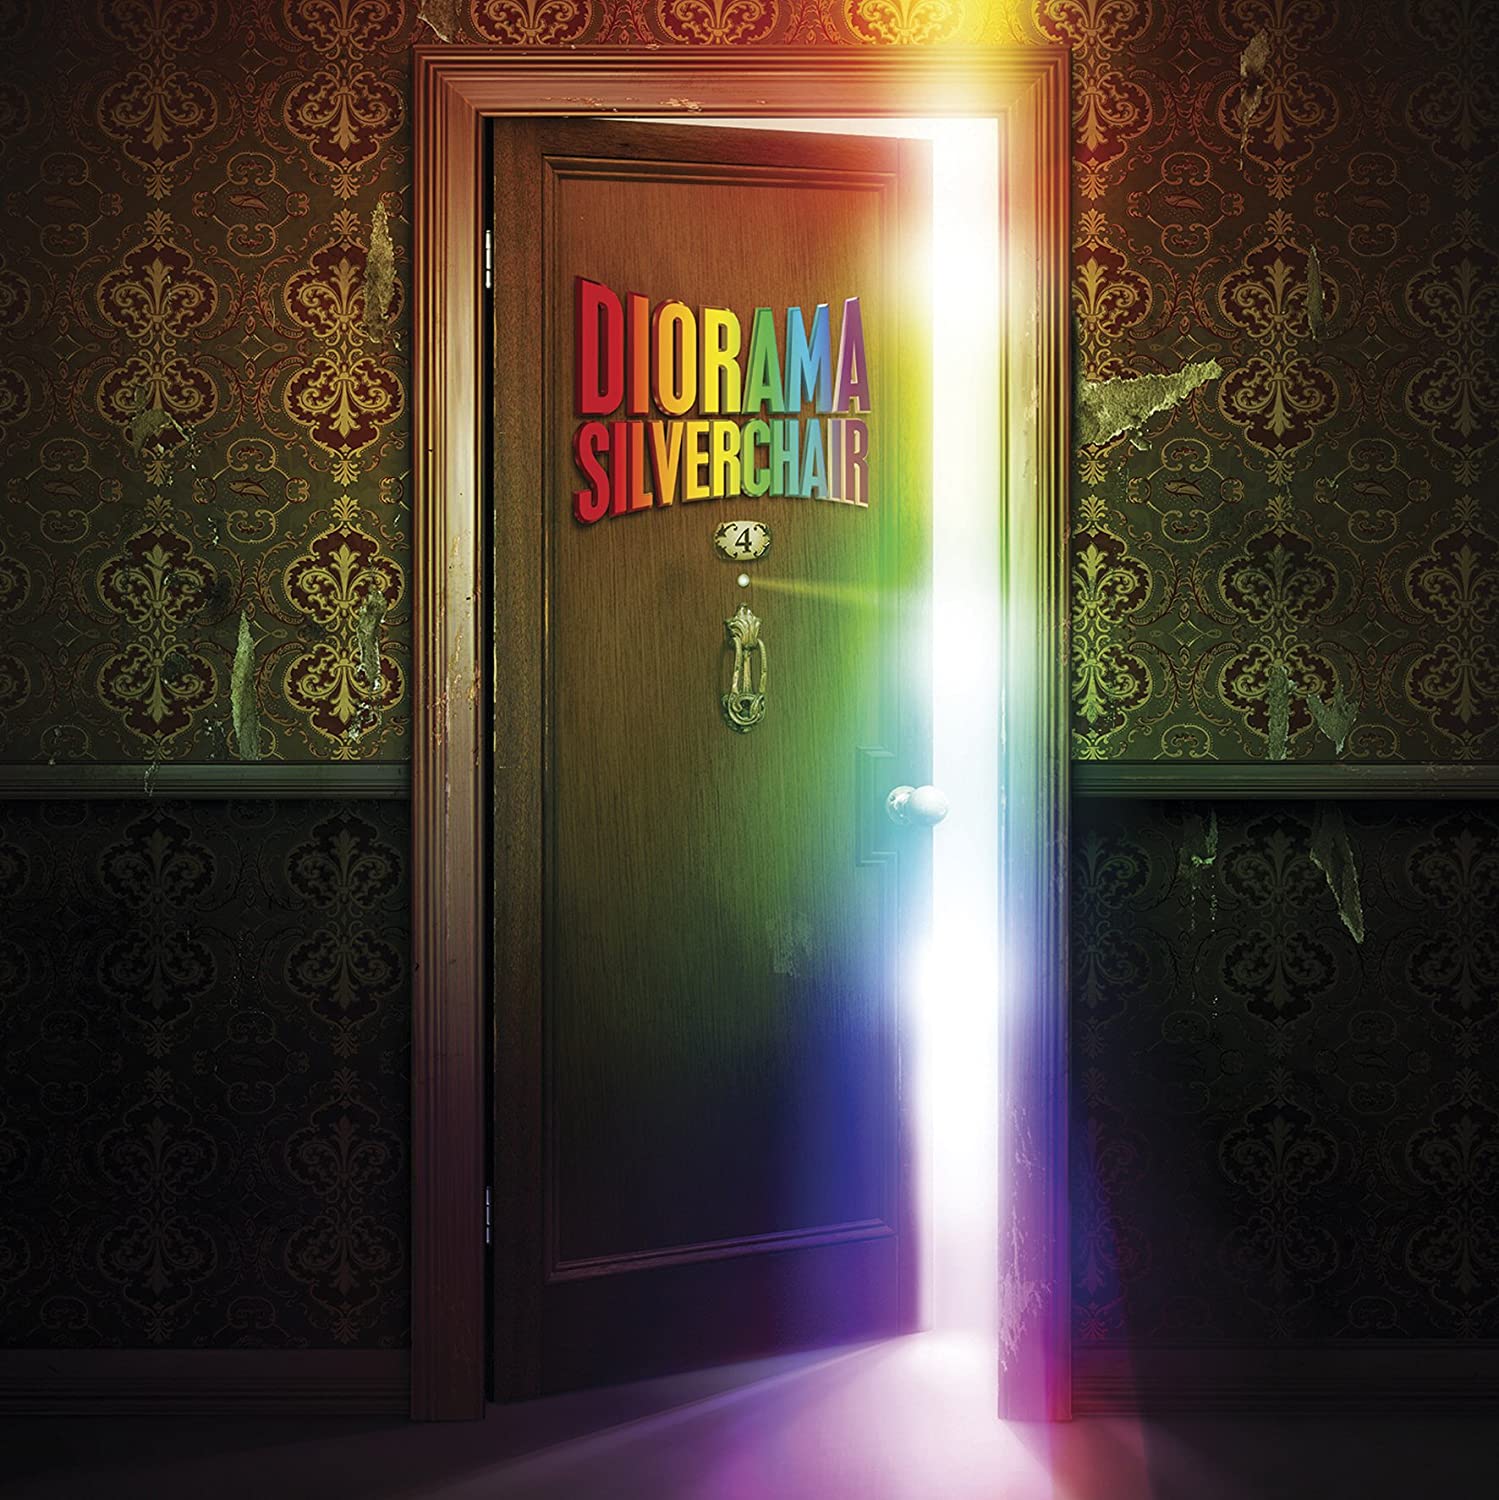 Silverchair - Diorama (Vinyl LP)